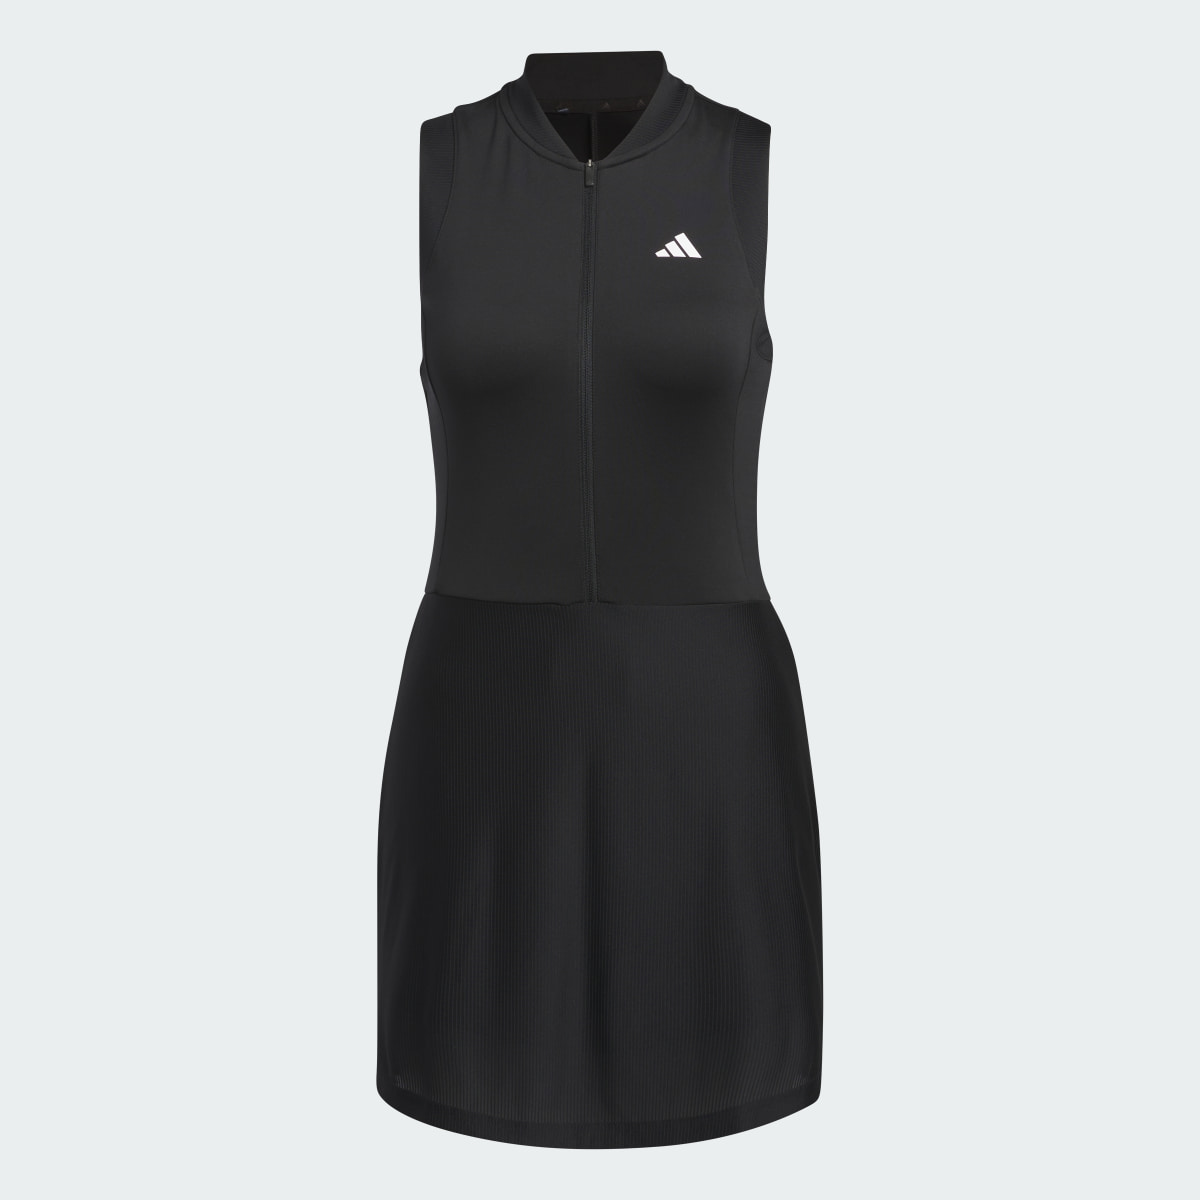 Adidas Women's Ultimate365 Sleeveless Dress. 6